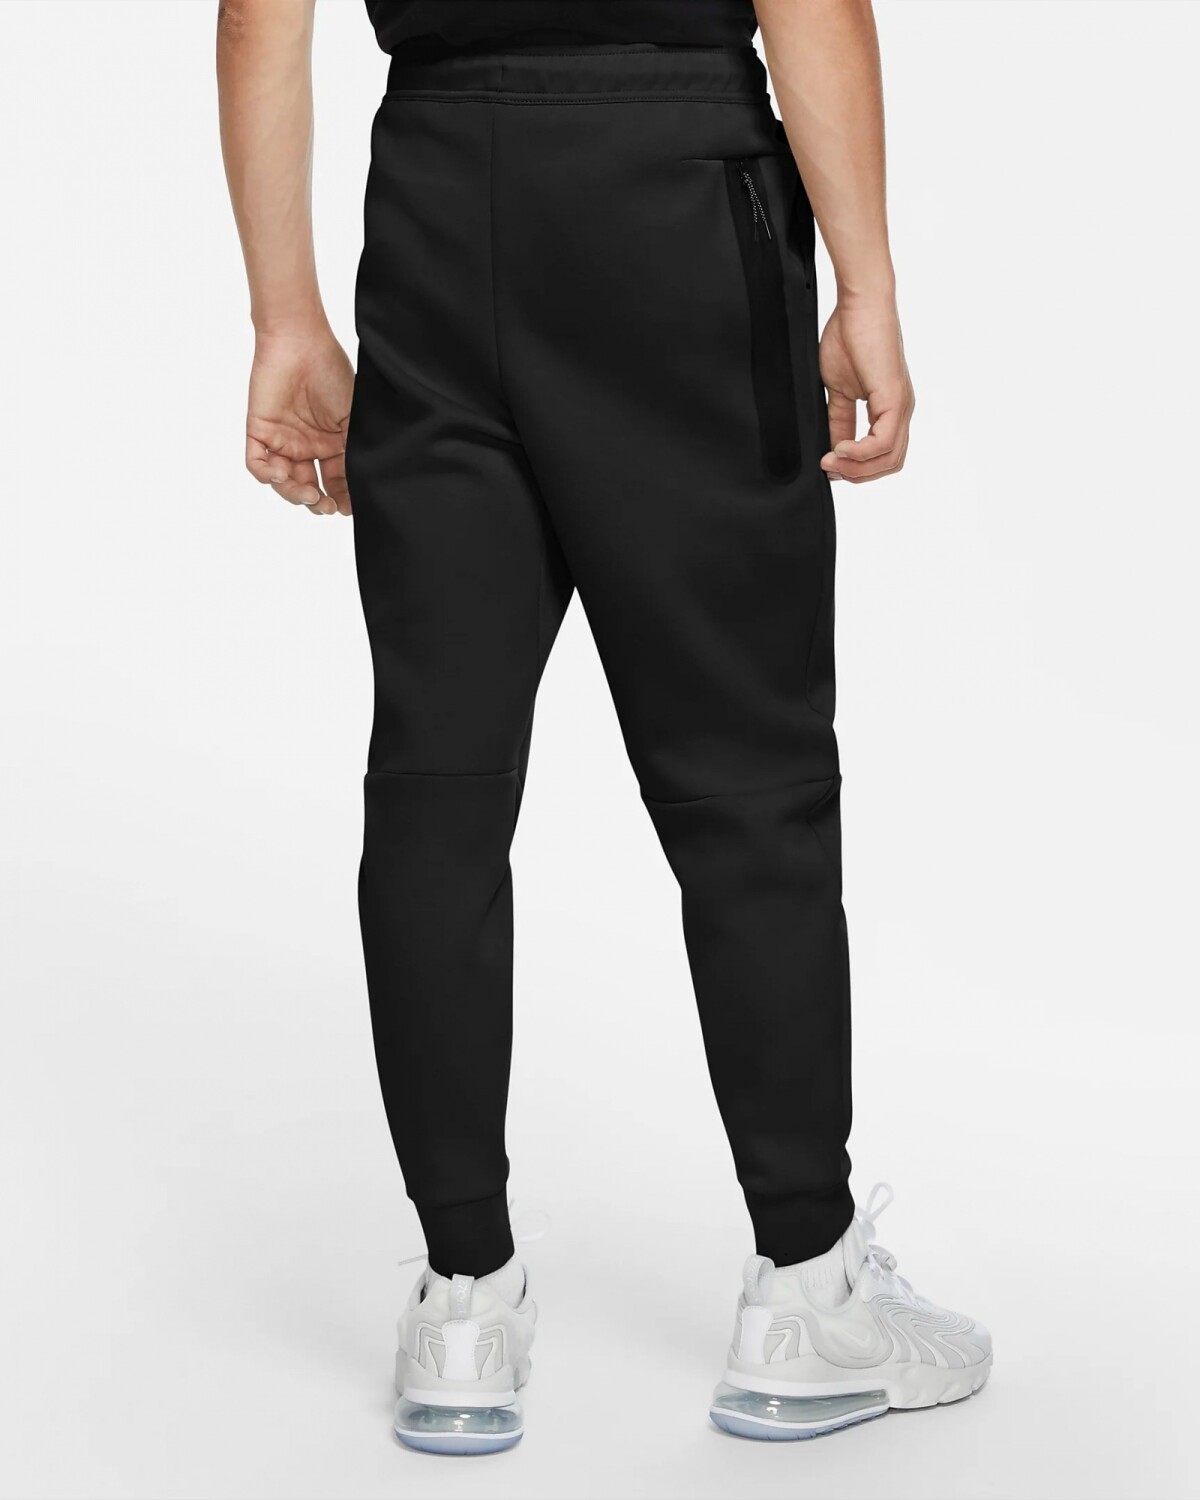 Pantalon Nike Moda Hombre Tech Fleece - S/C — Menpi